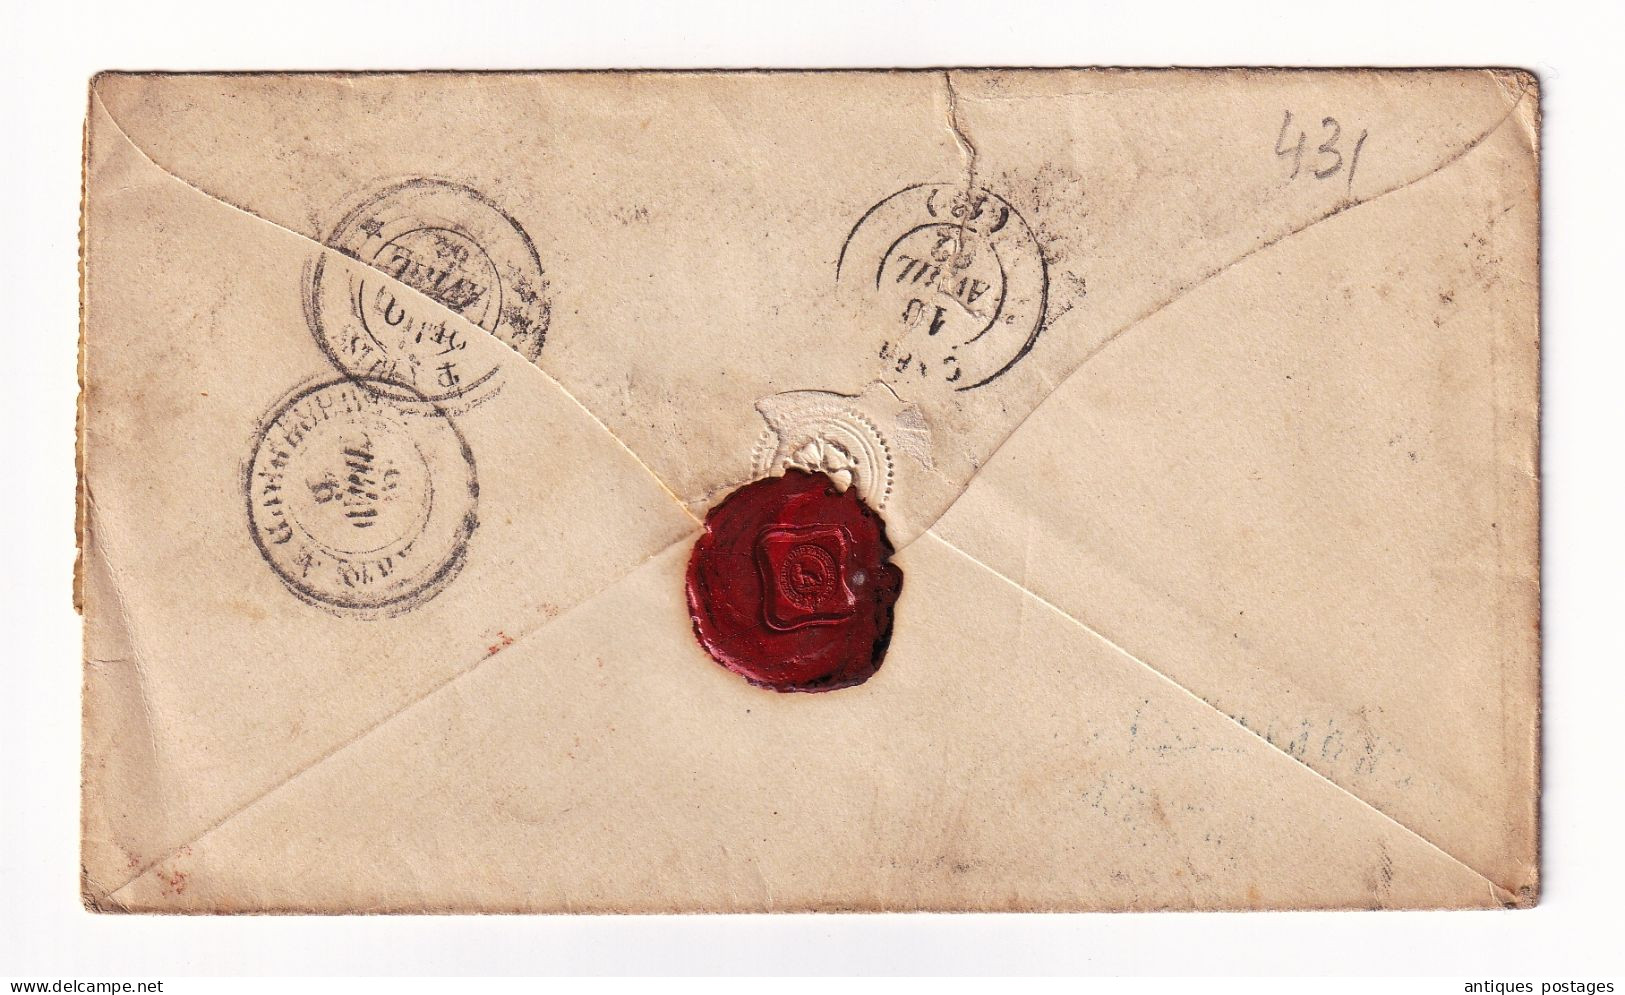 Great Britain 1862 London Bertrand Maire De Caen Calvados England Stamp Queen Victoria - Storia Postale